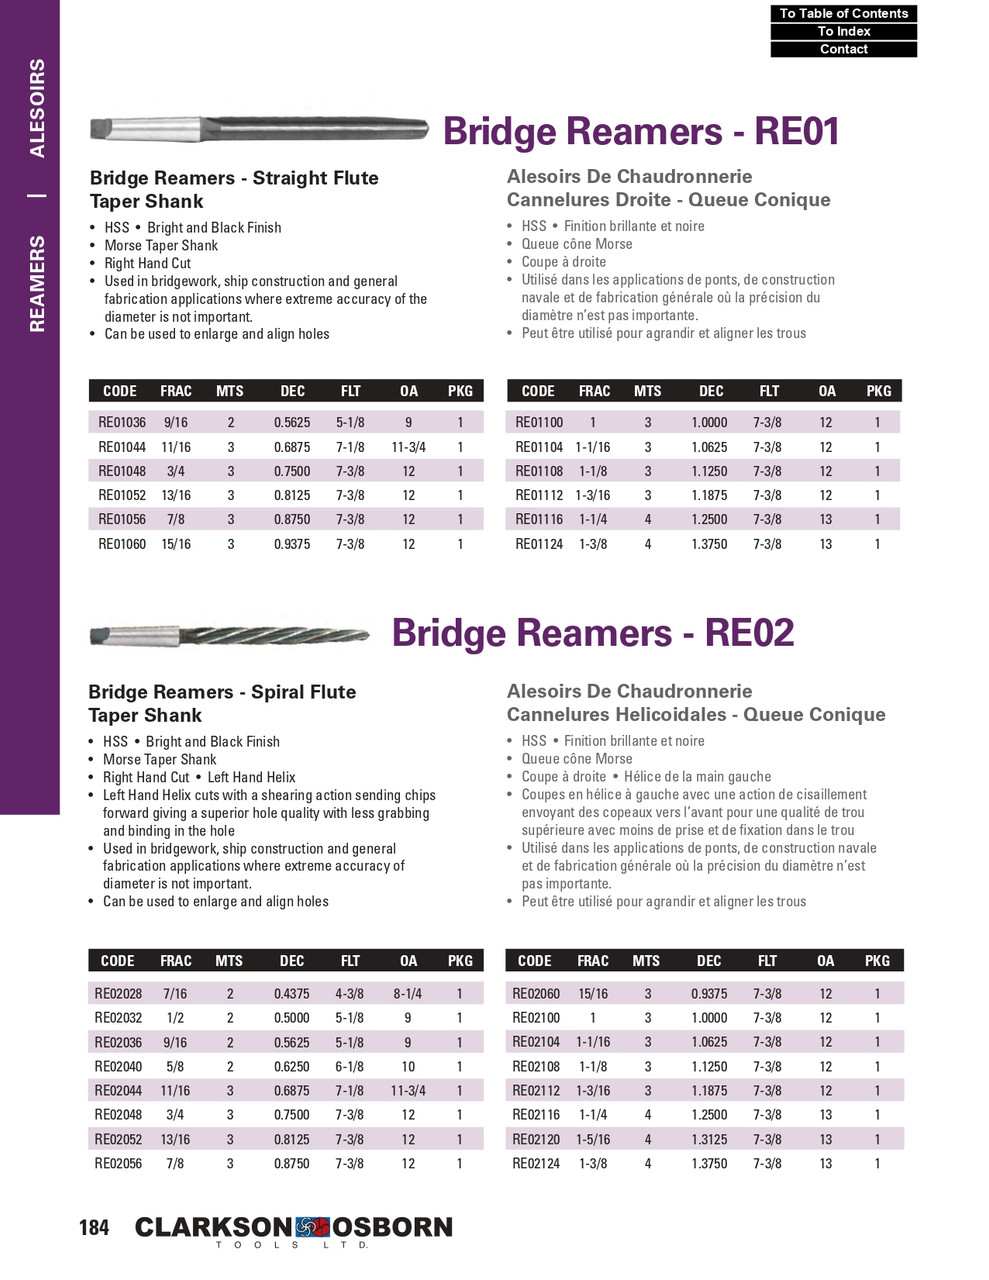 11/16" x #3 HSS Morse Taper Bridge Reamer   RE02044